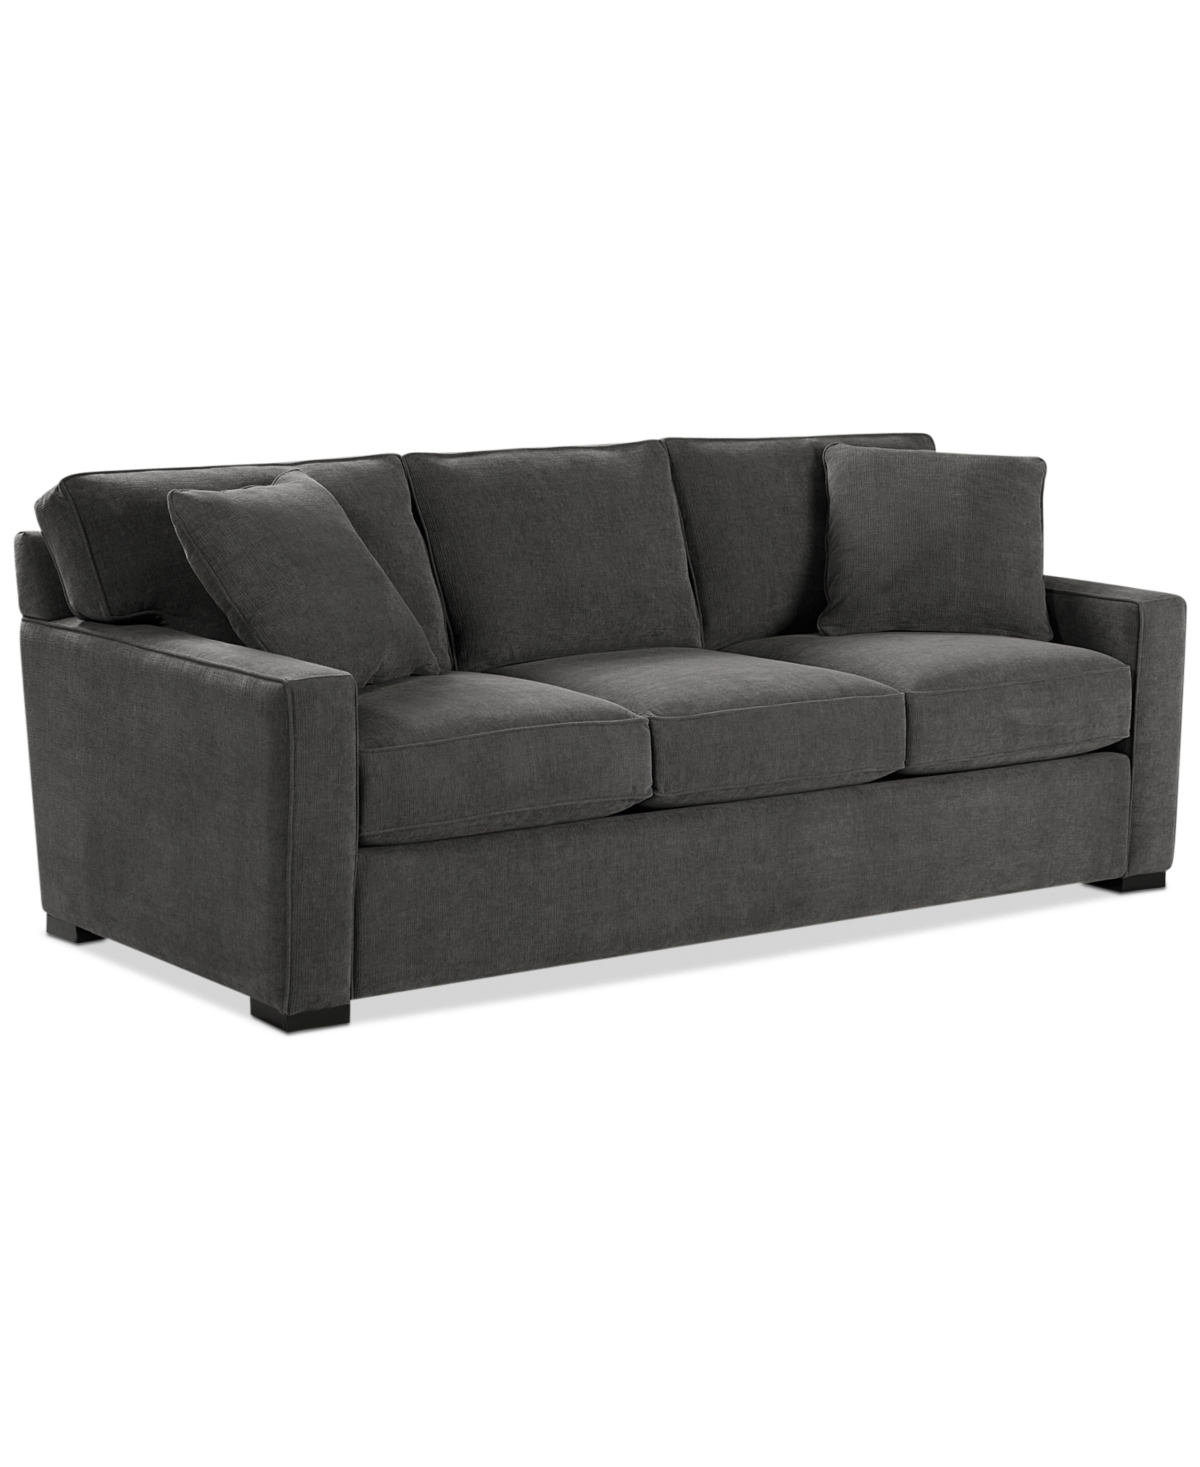 Radley 86 Fabric Sofa, Created for Macys